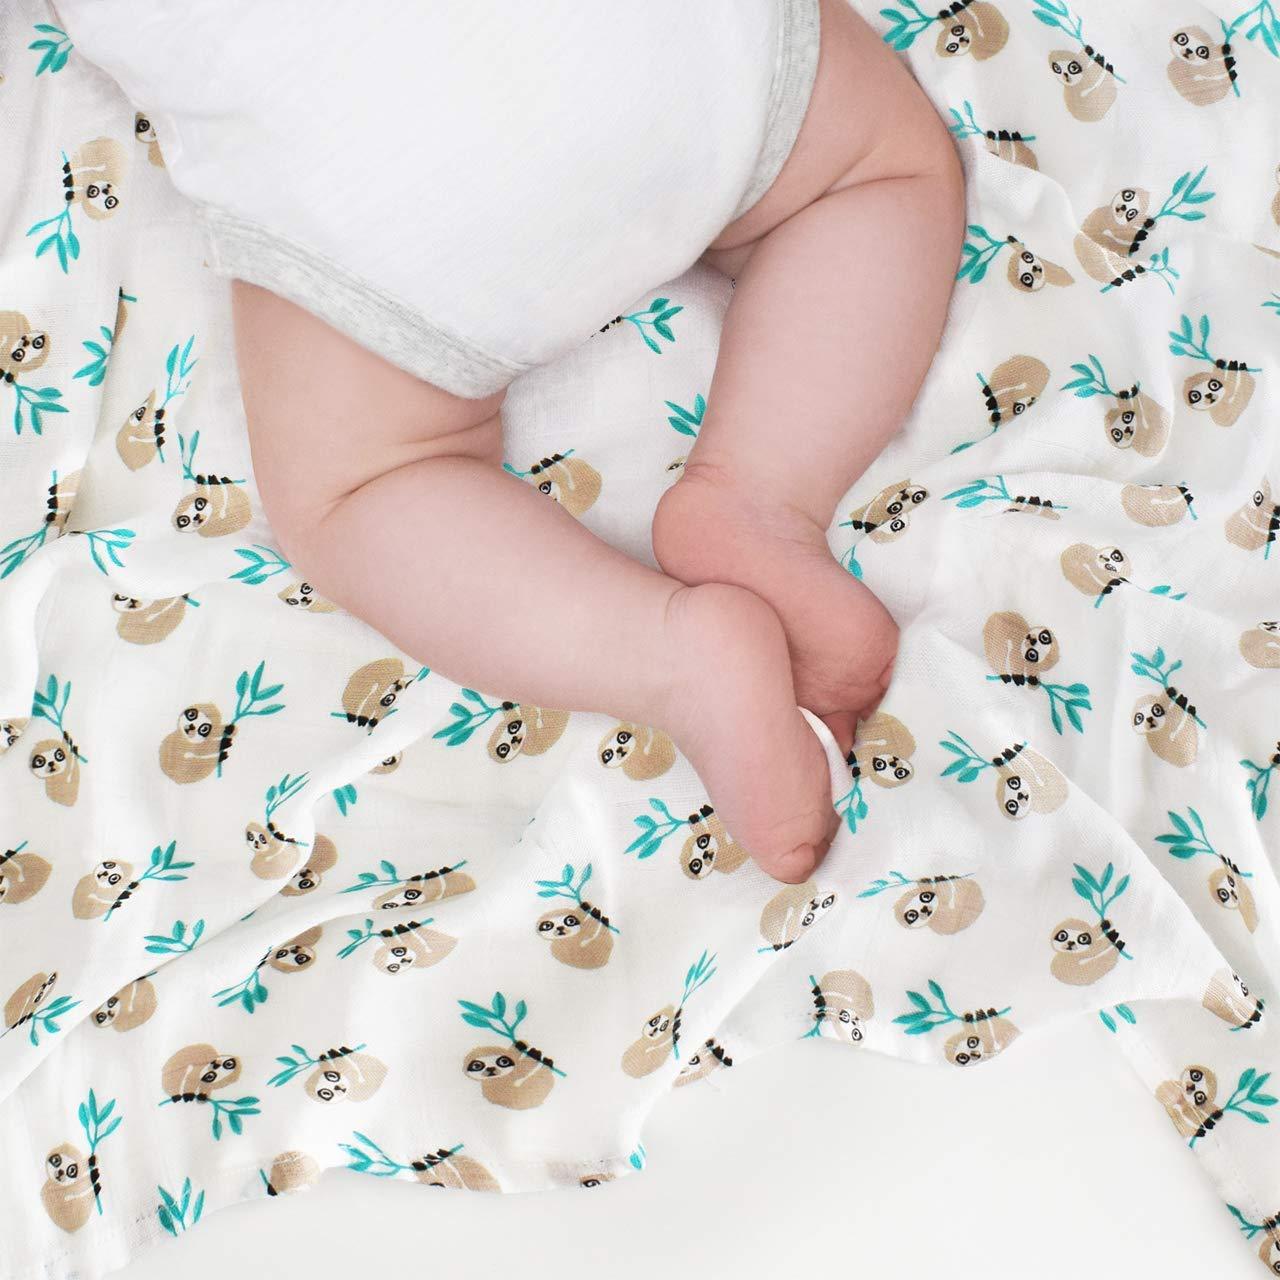 Bambino Mio - Mantas Kit com 3 Manta/Cobertor/Wrap Anne Claire Baby Store 